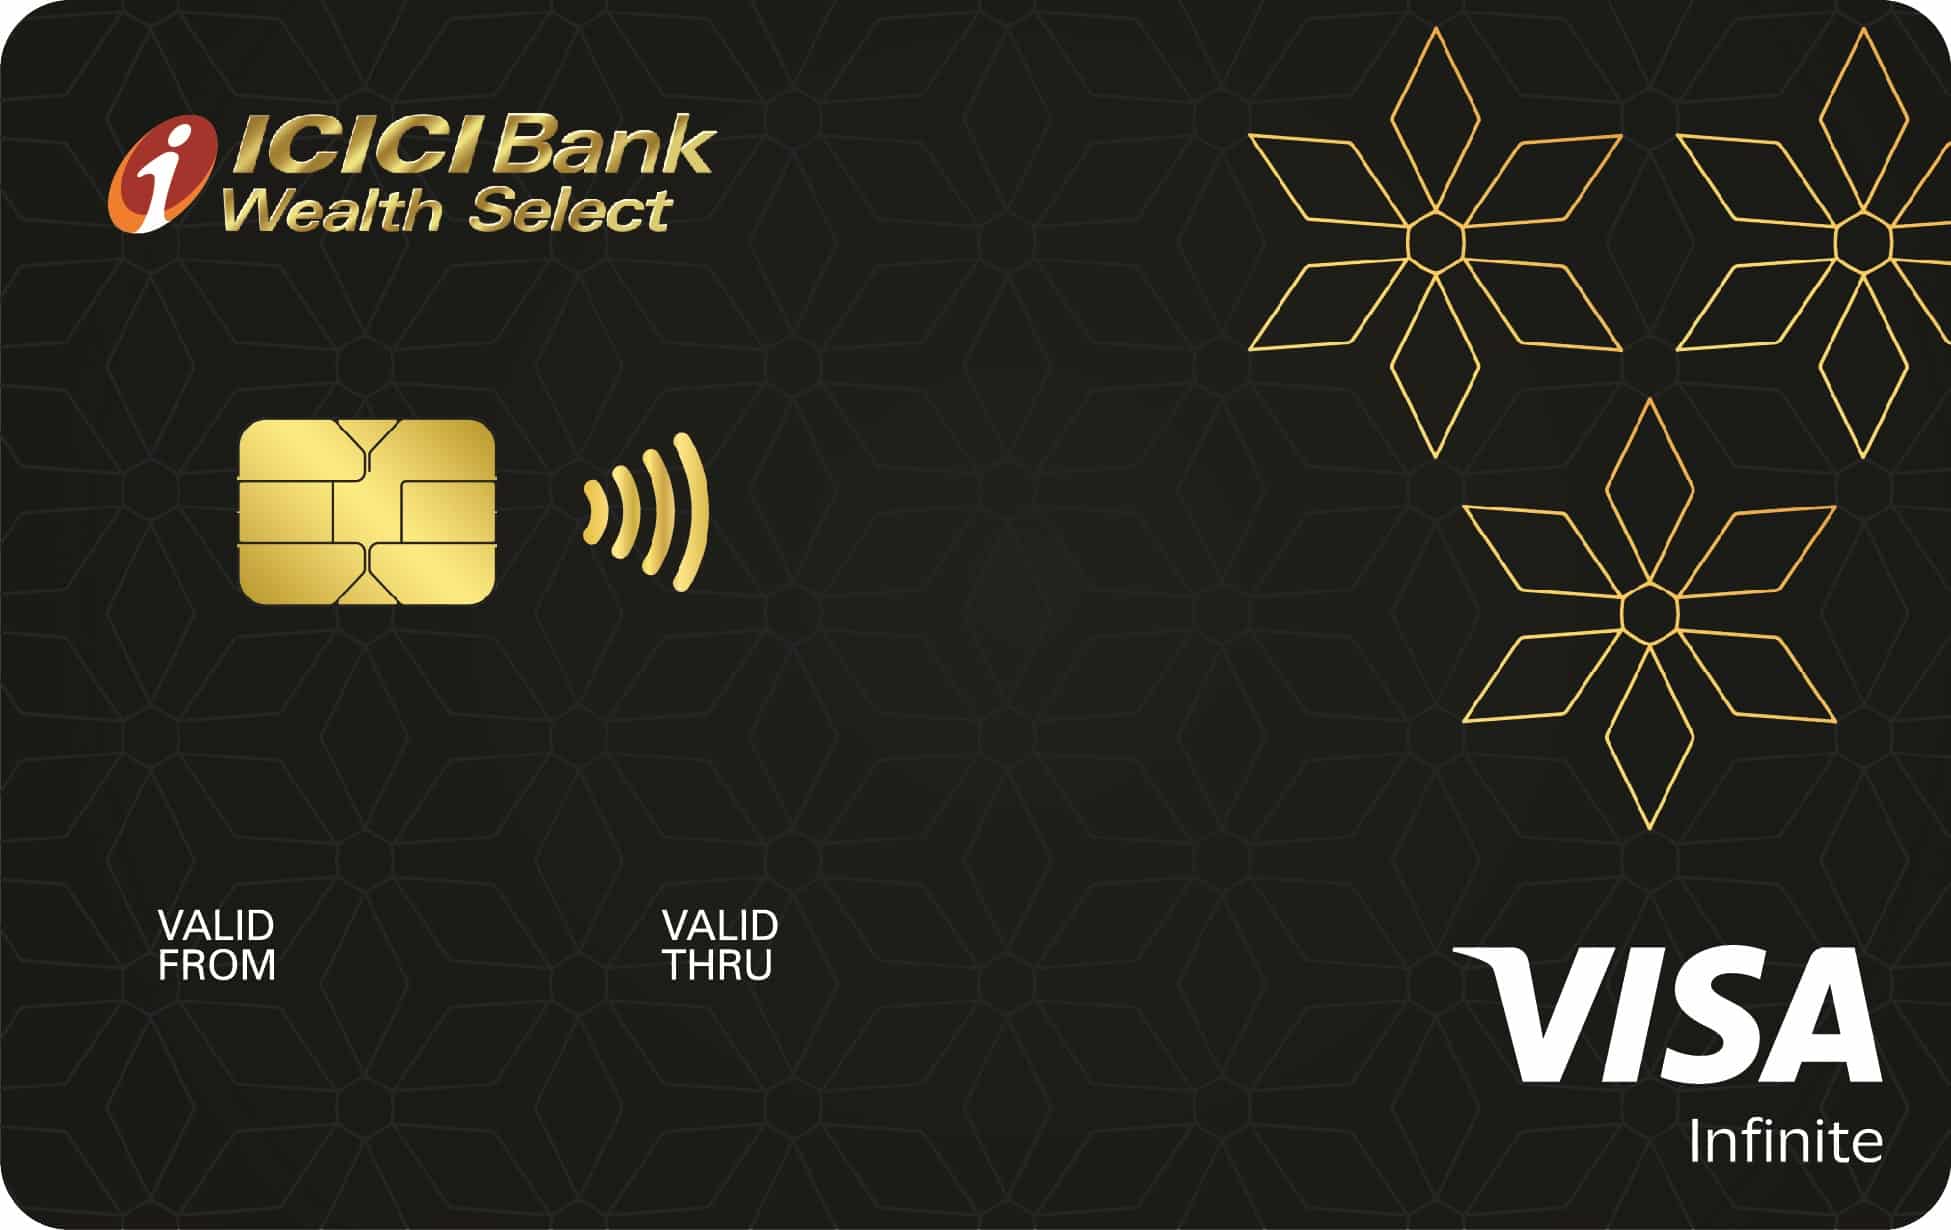 ICICI Bank Wealth Select Visa Infinite Debit Card